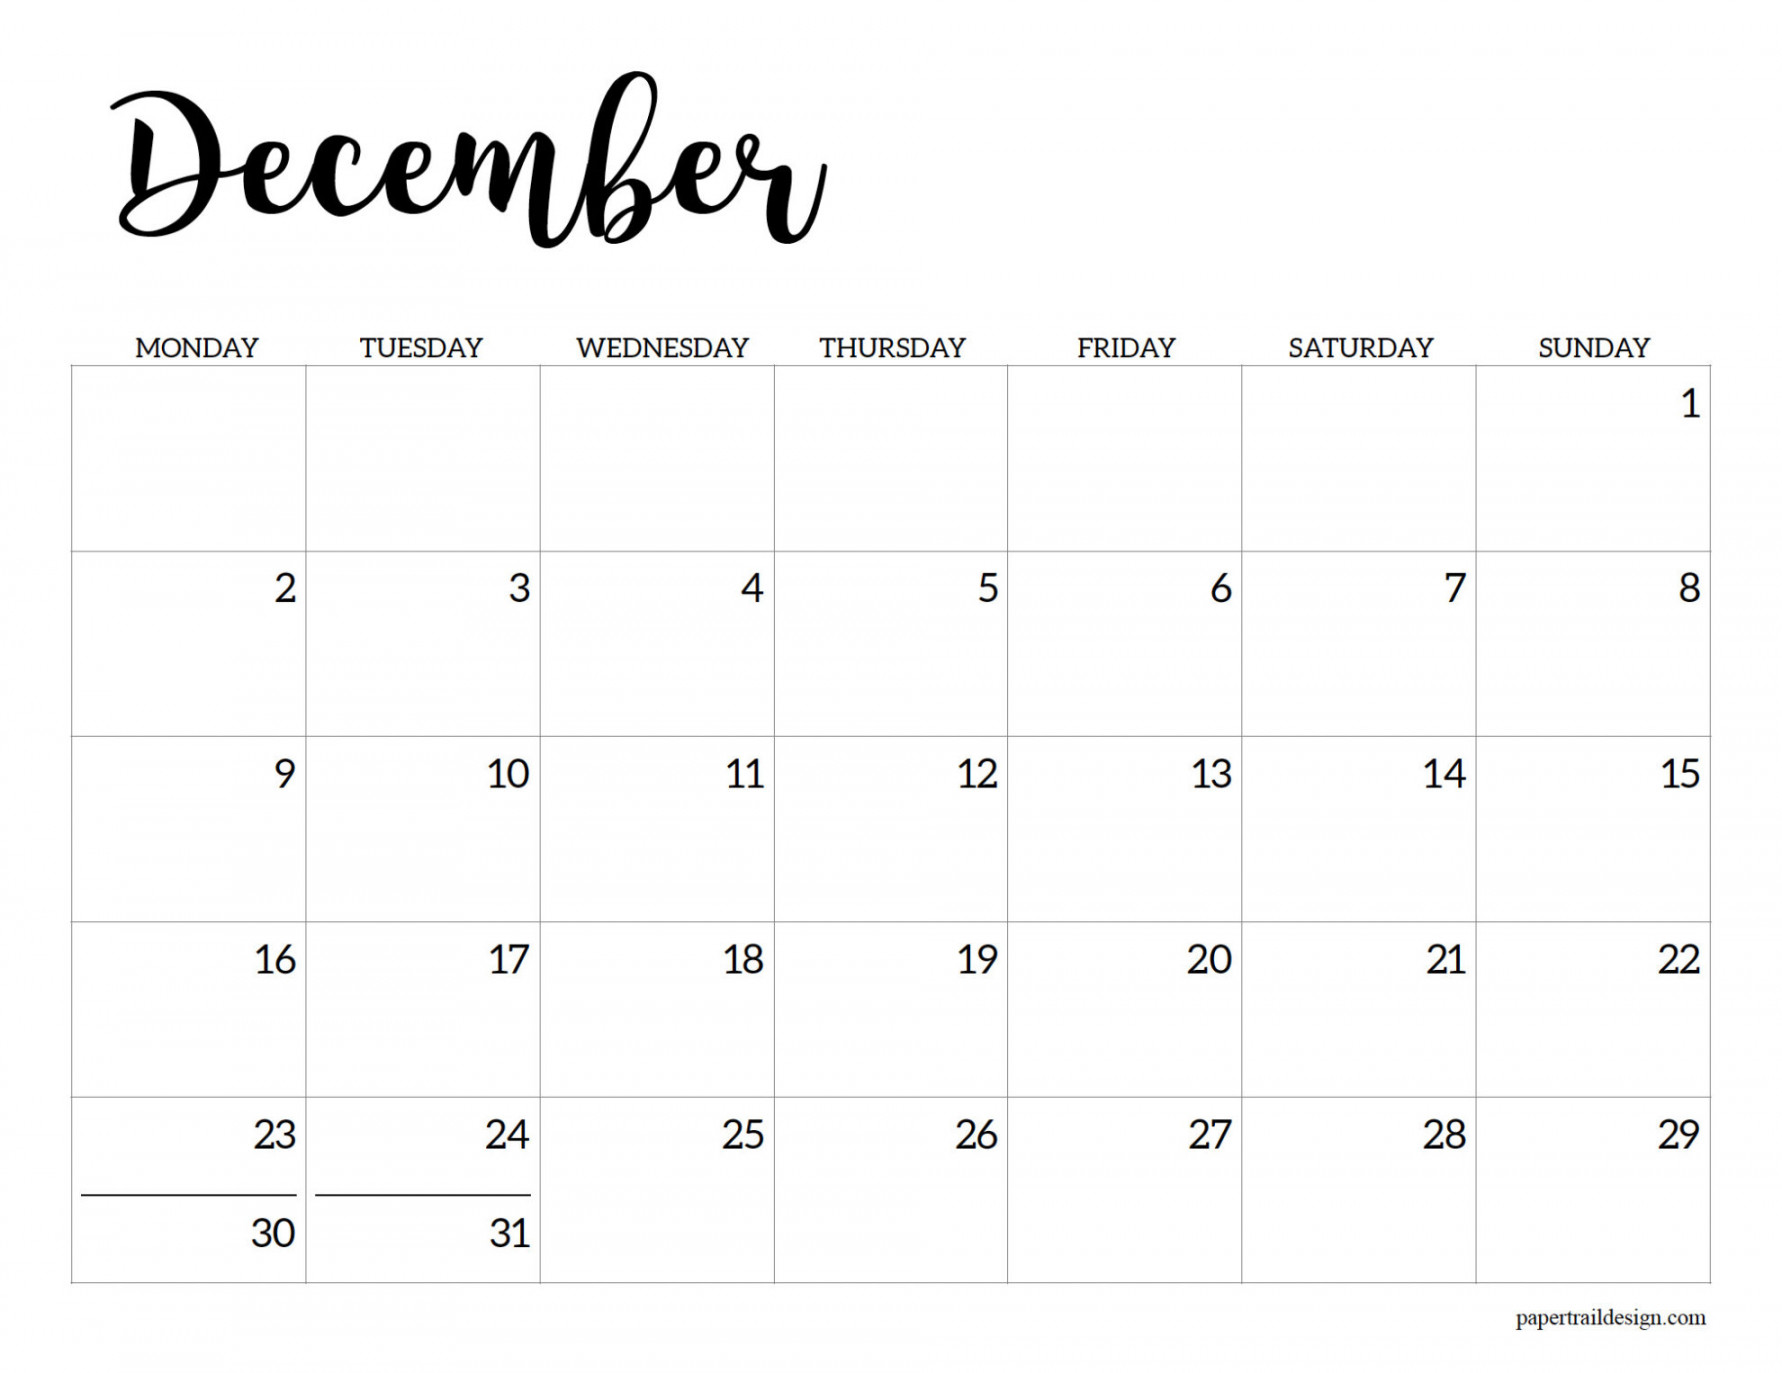 Free Printable  Calendar – Monday Start - Paper Trail Design